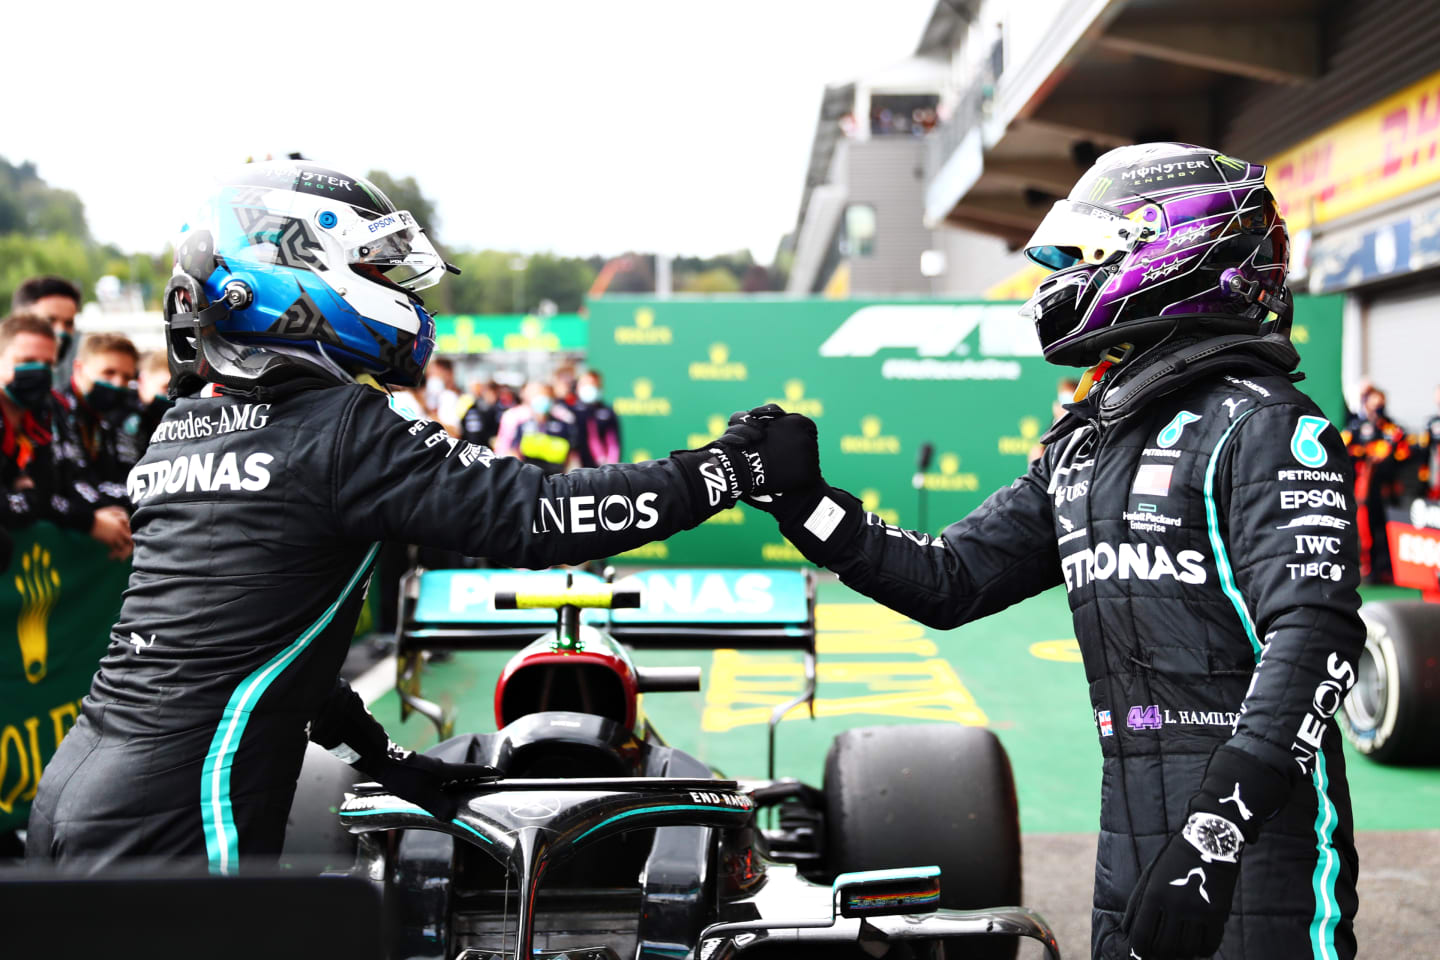 SPA, BELGIUM - AUGUST 30: Race winner Lewis Hamilton of Great Britain and Mercedes GP fist bumps